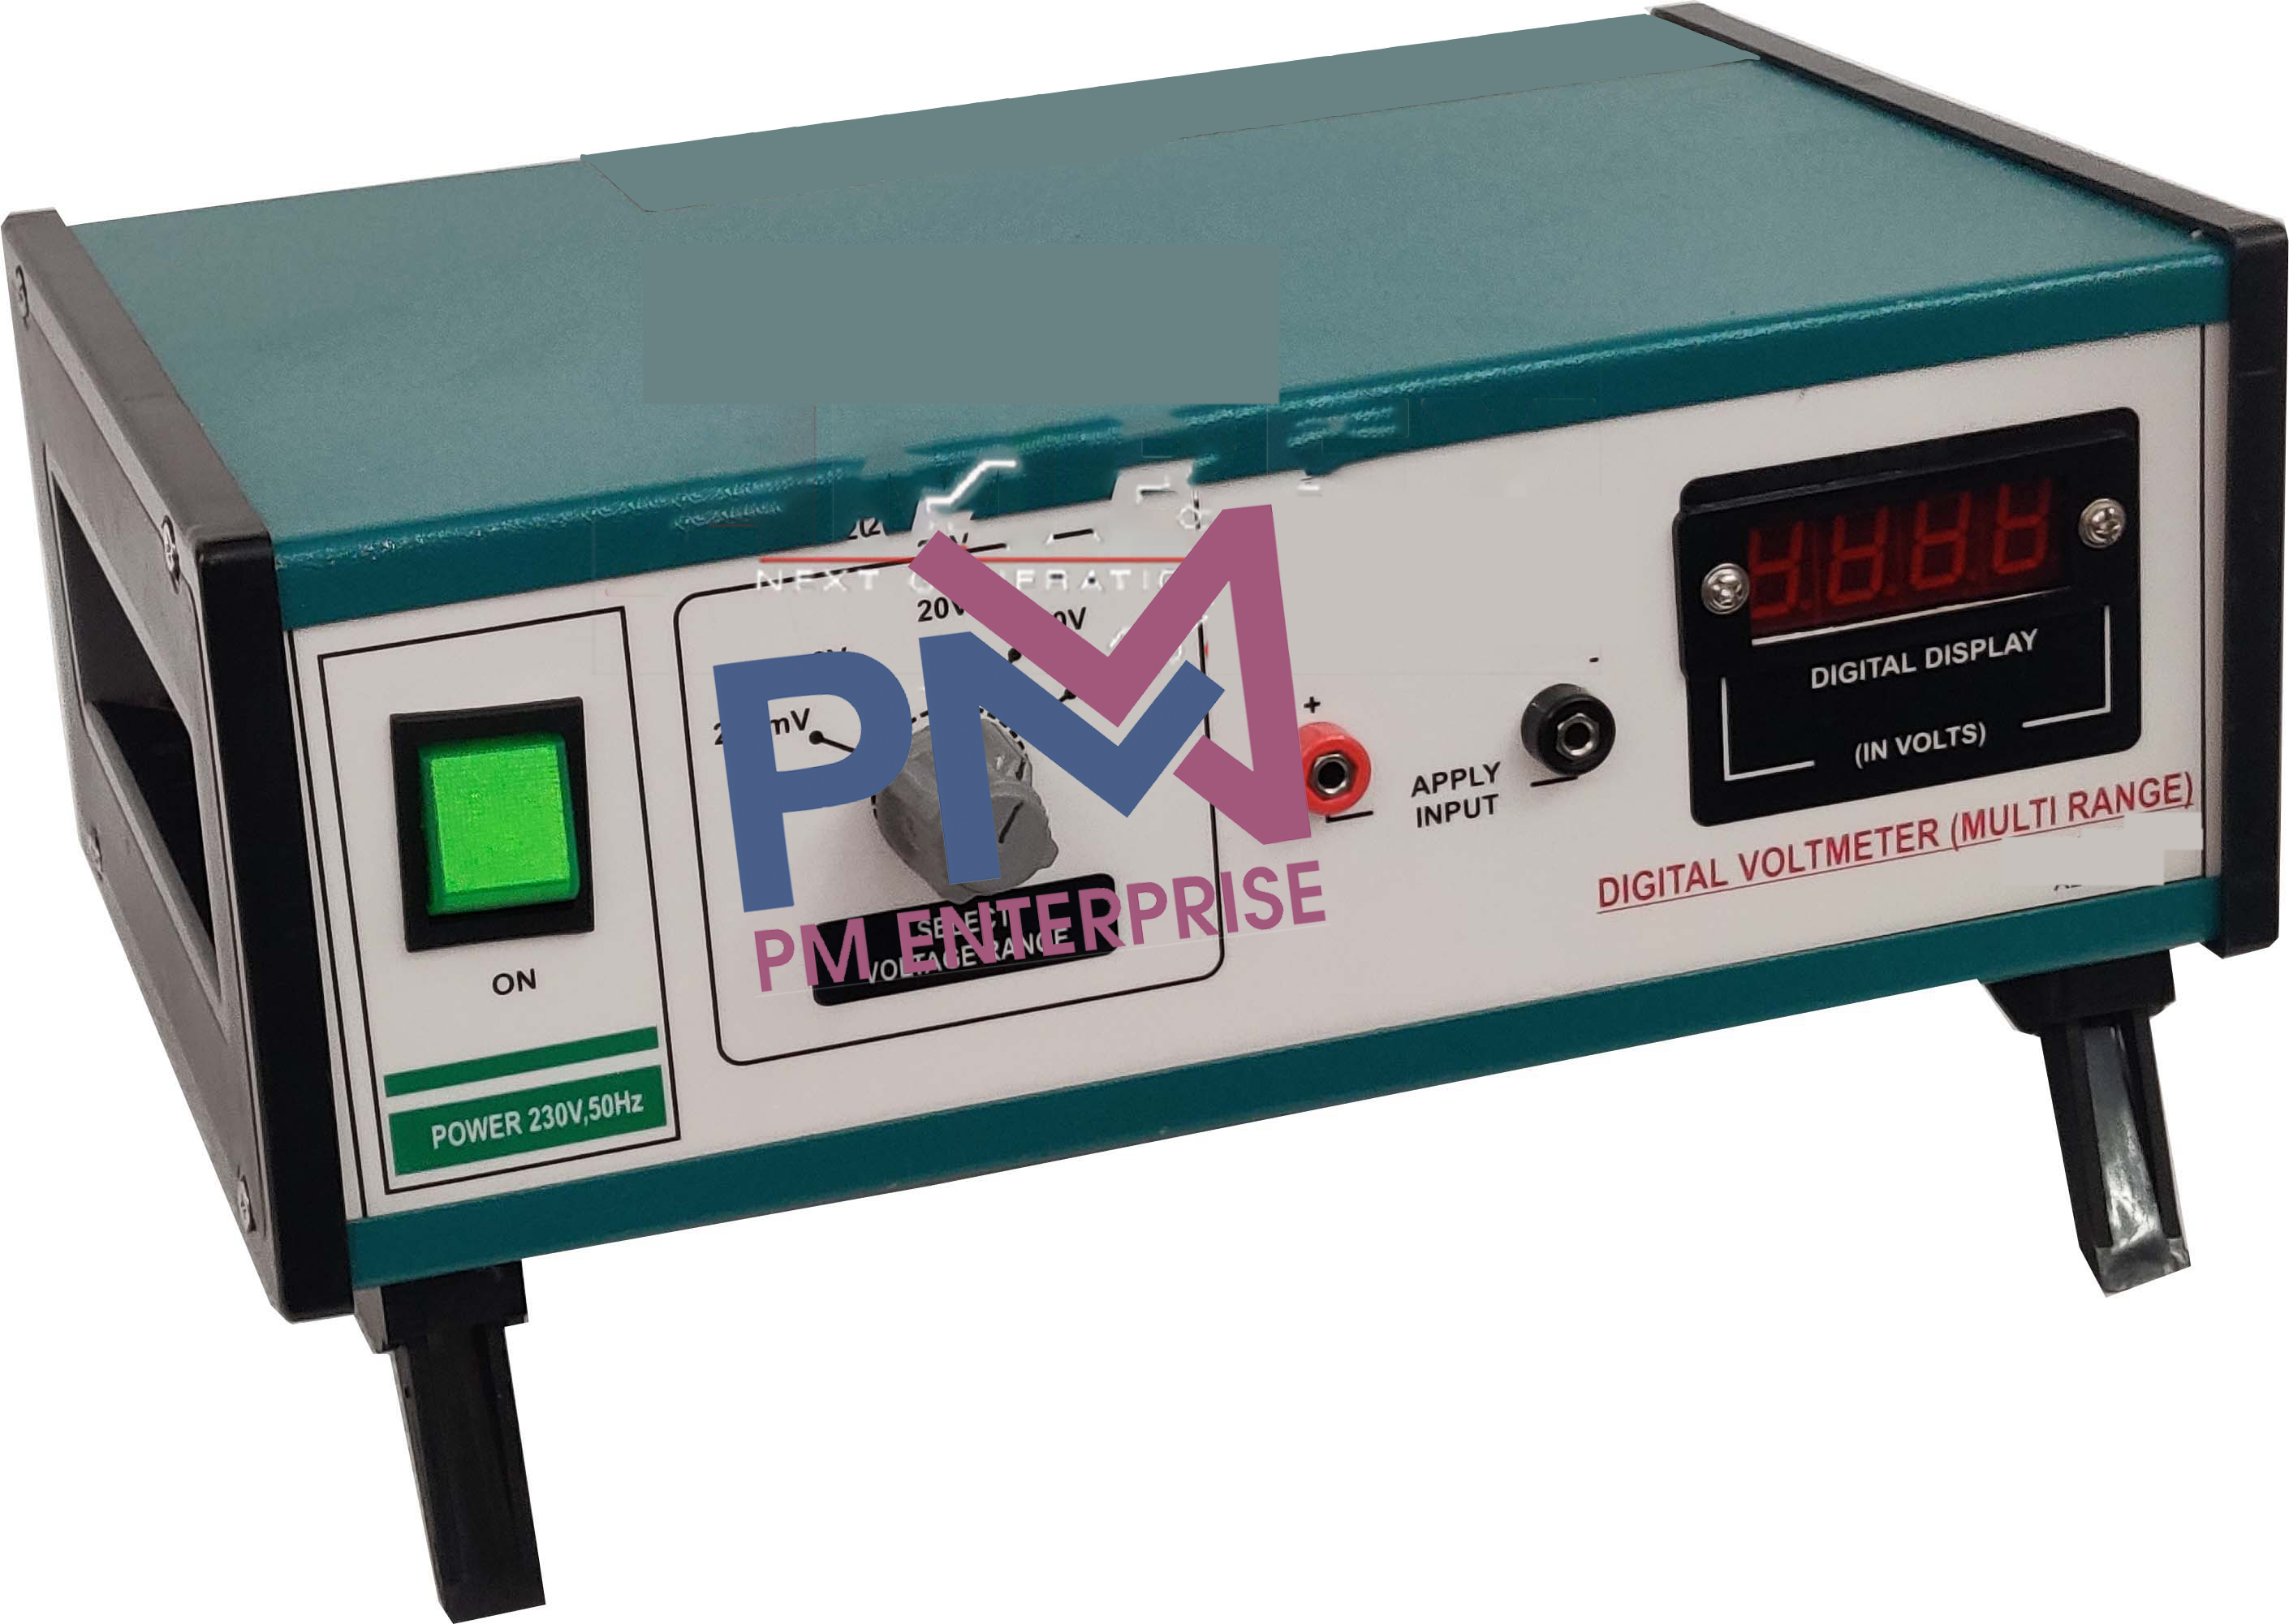 PM-P108B DIGITAL VOLTMETER (MULTI RANGE)